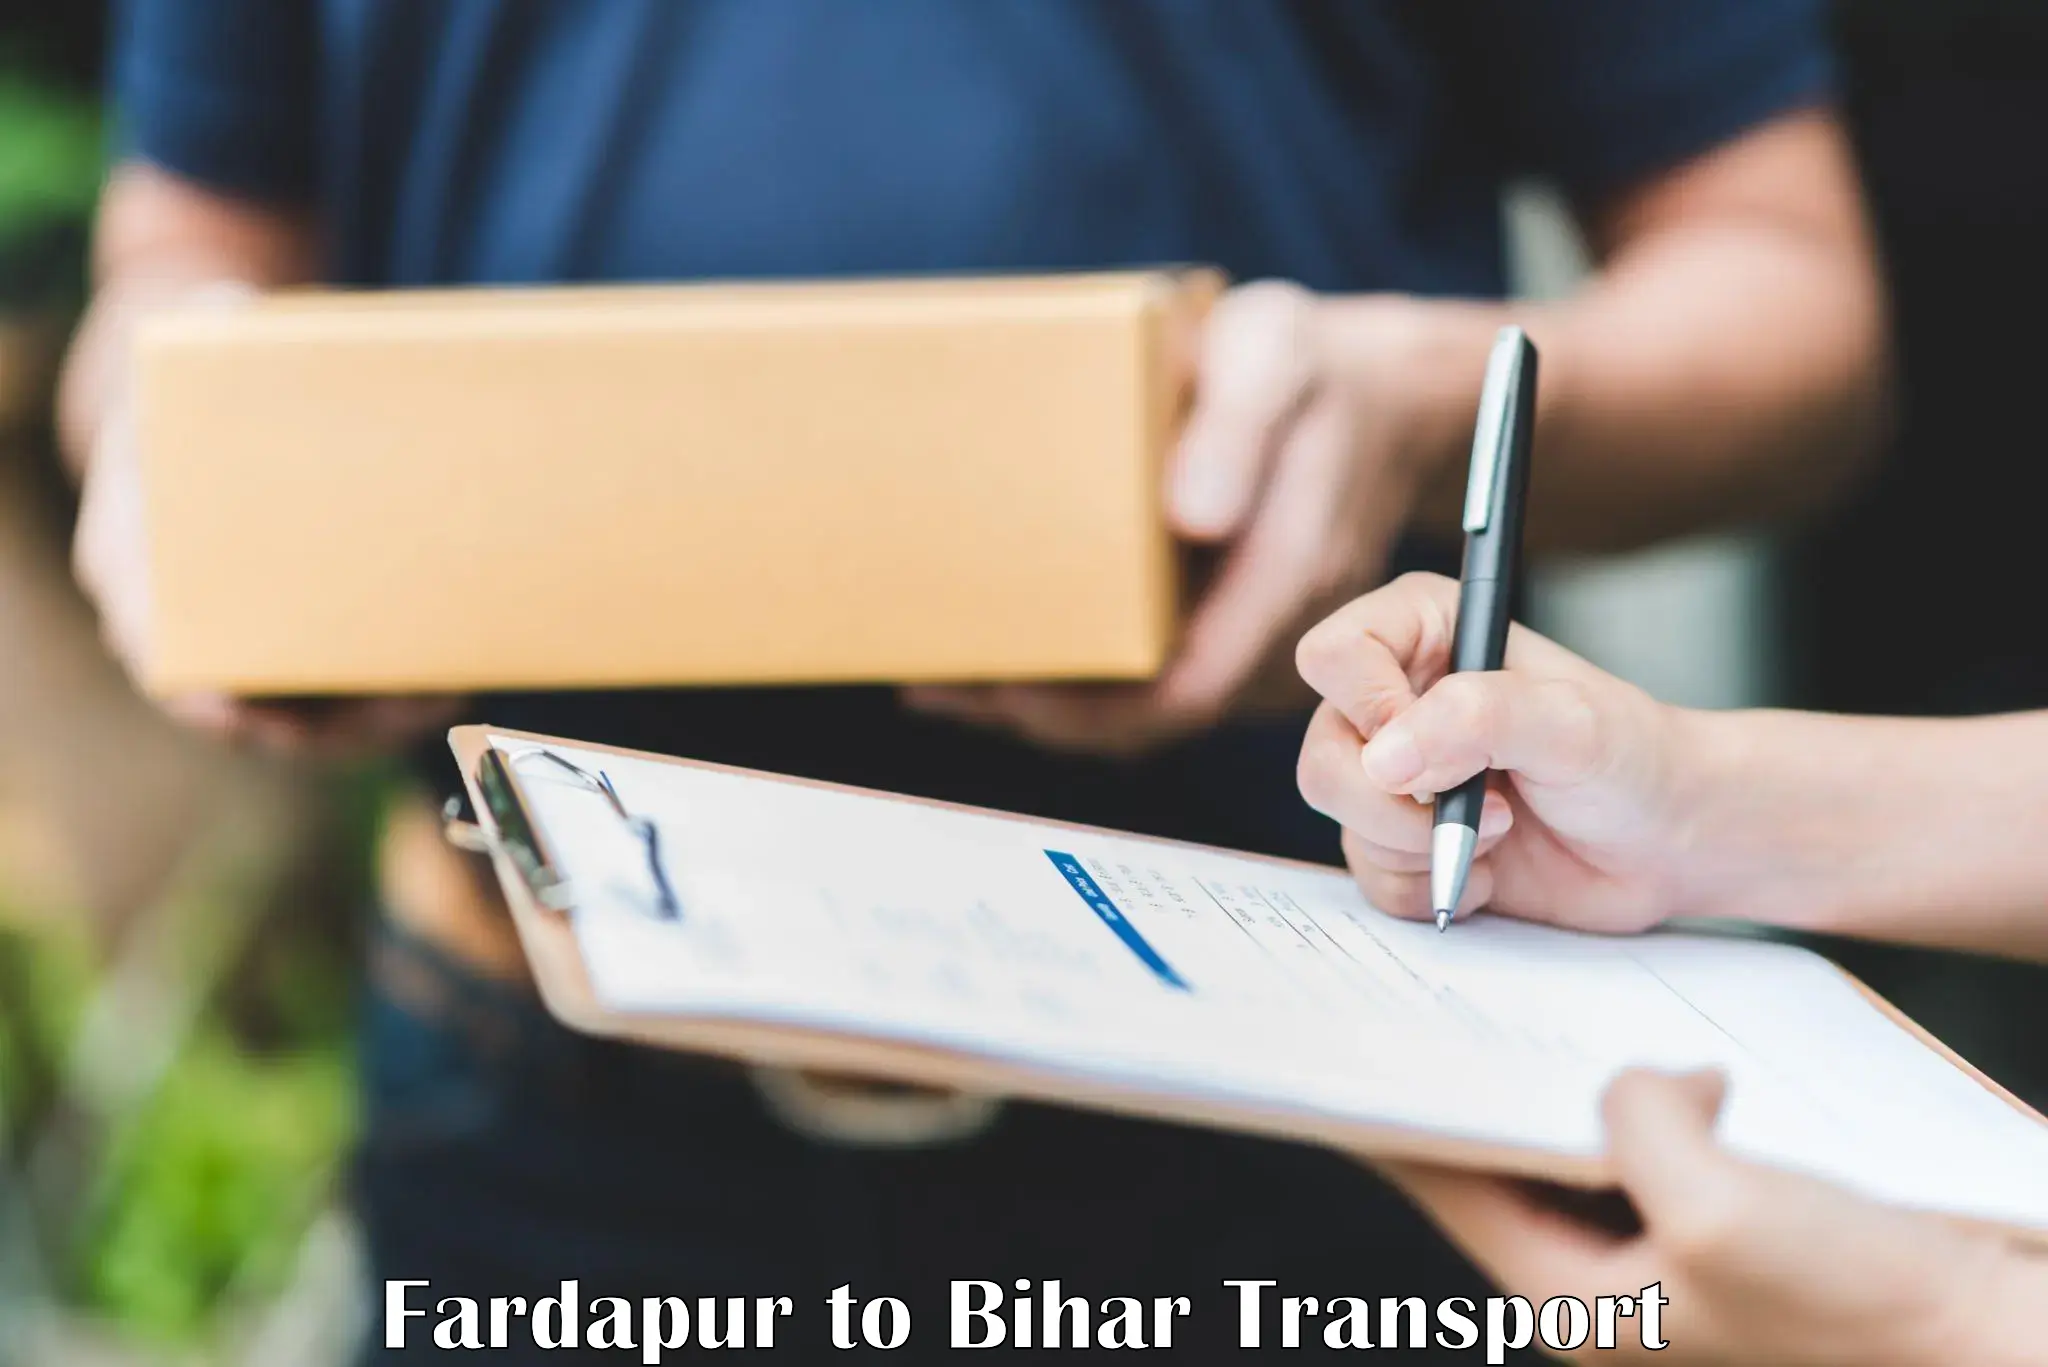 Sending bike to another city Fardapur to Tajpur Samastipur